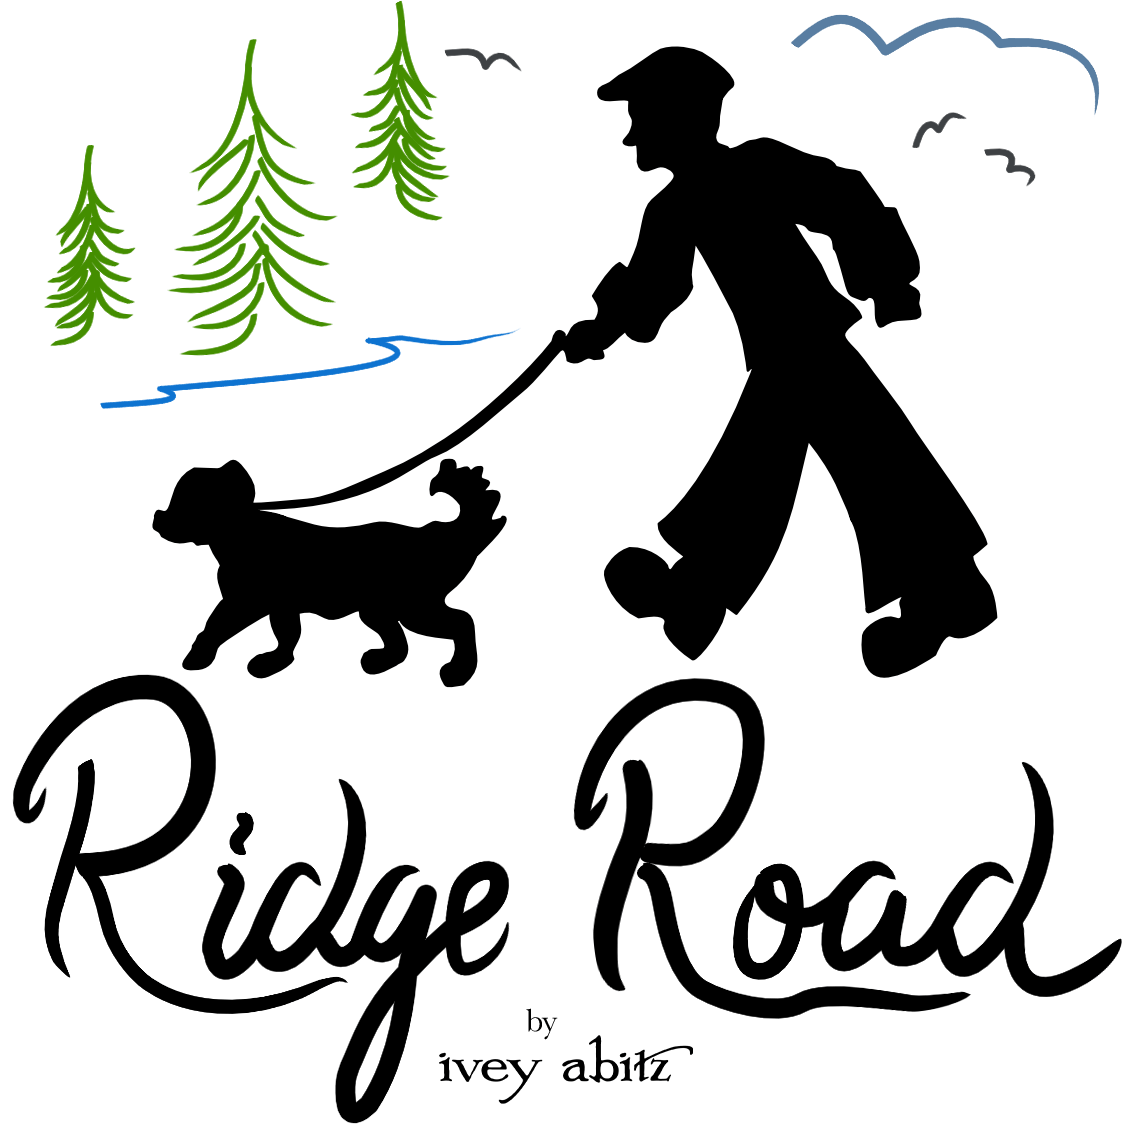 Ridge Road by Ivey Abitz logo